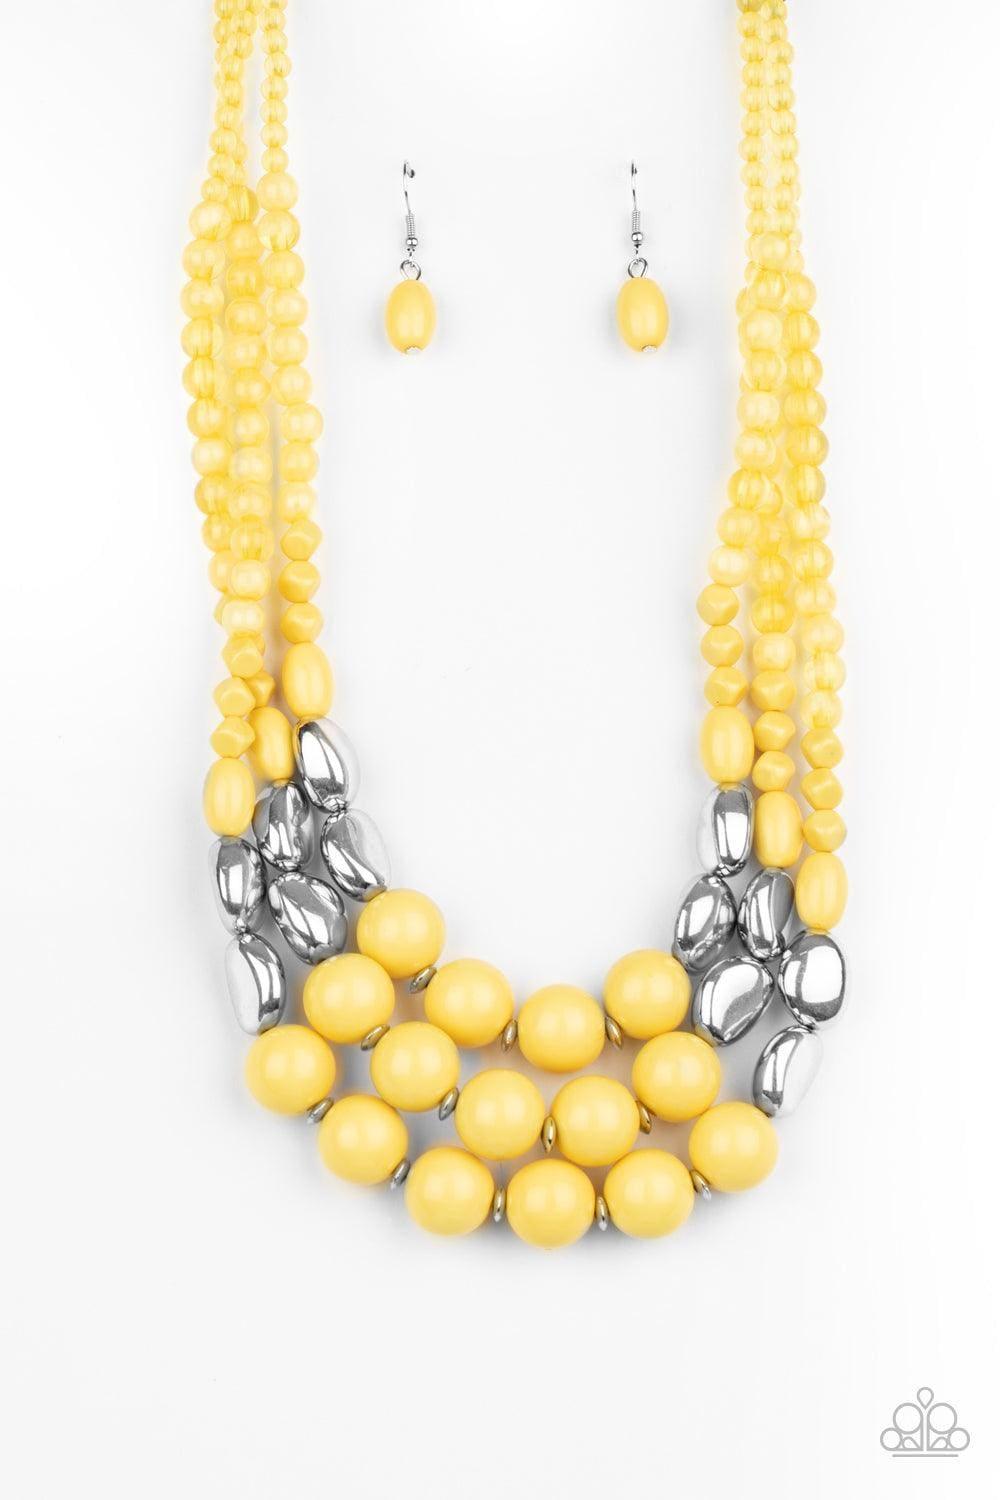 Paparazzi Accessories - Flamingo Flamboyance - Yellow Necklace - Bling by JessieK